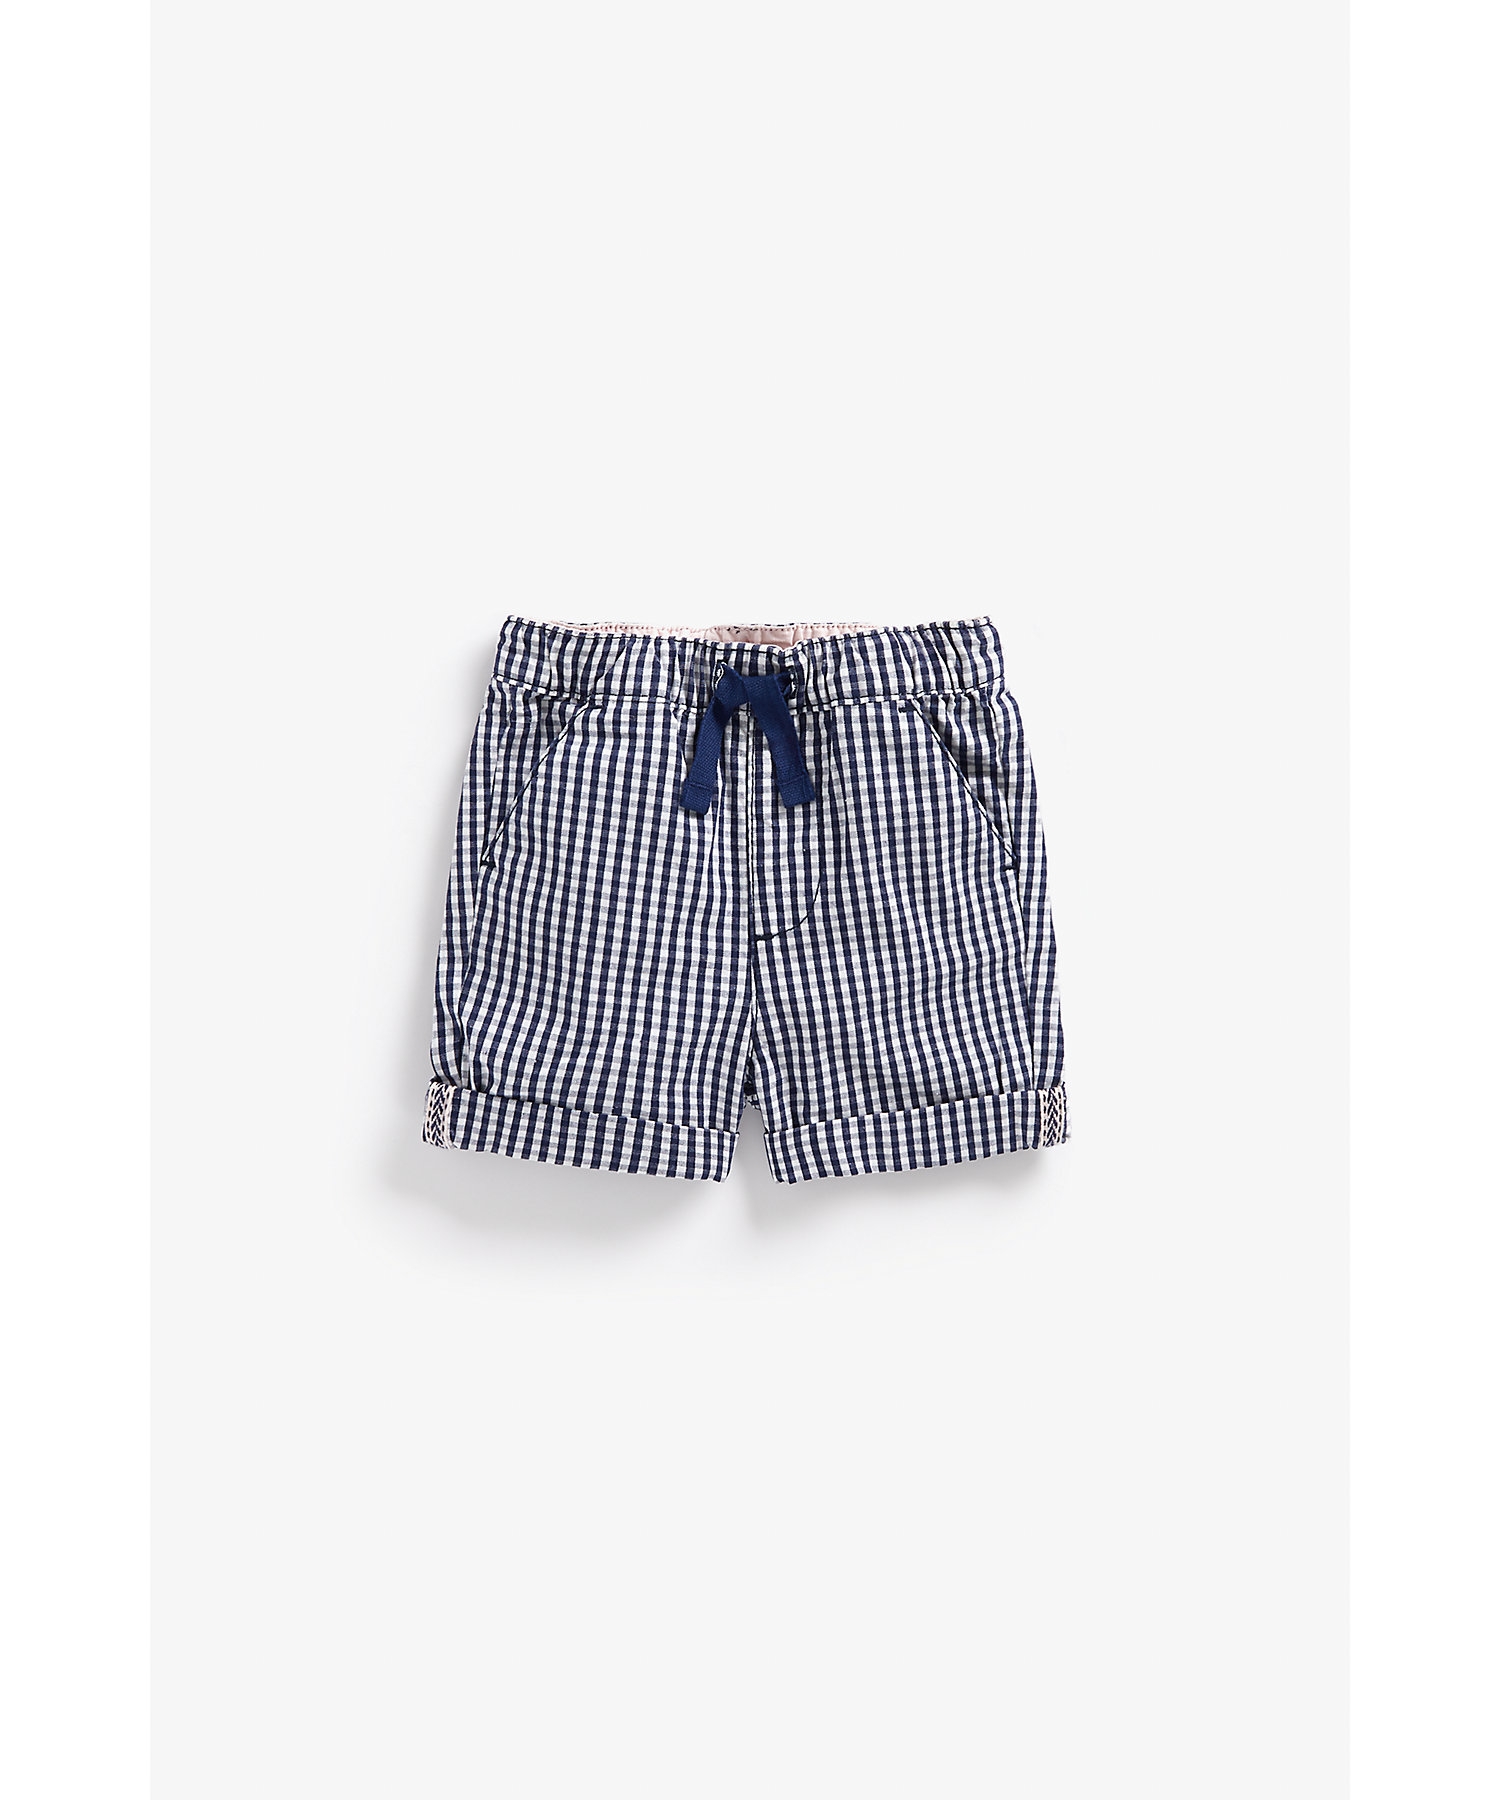 Boys Shorts Checked-Navy